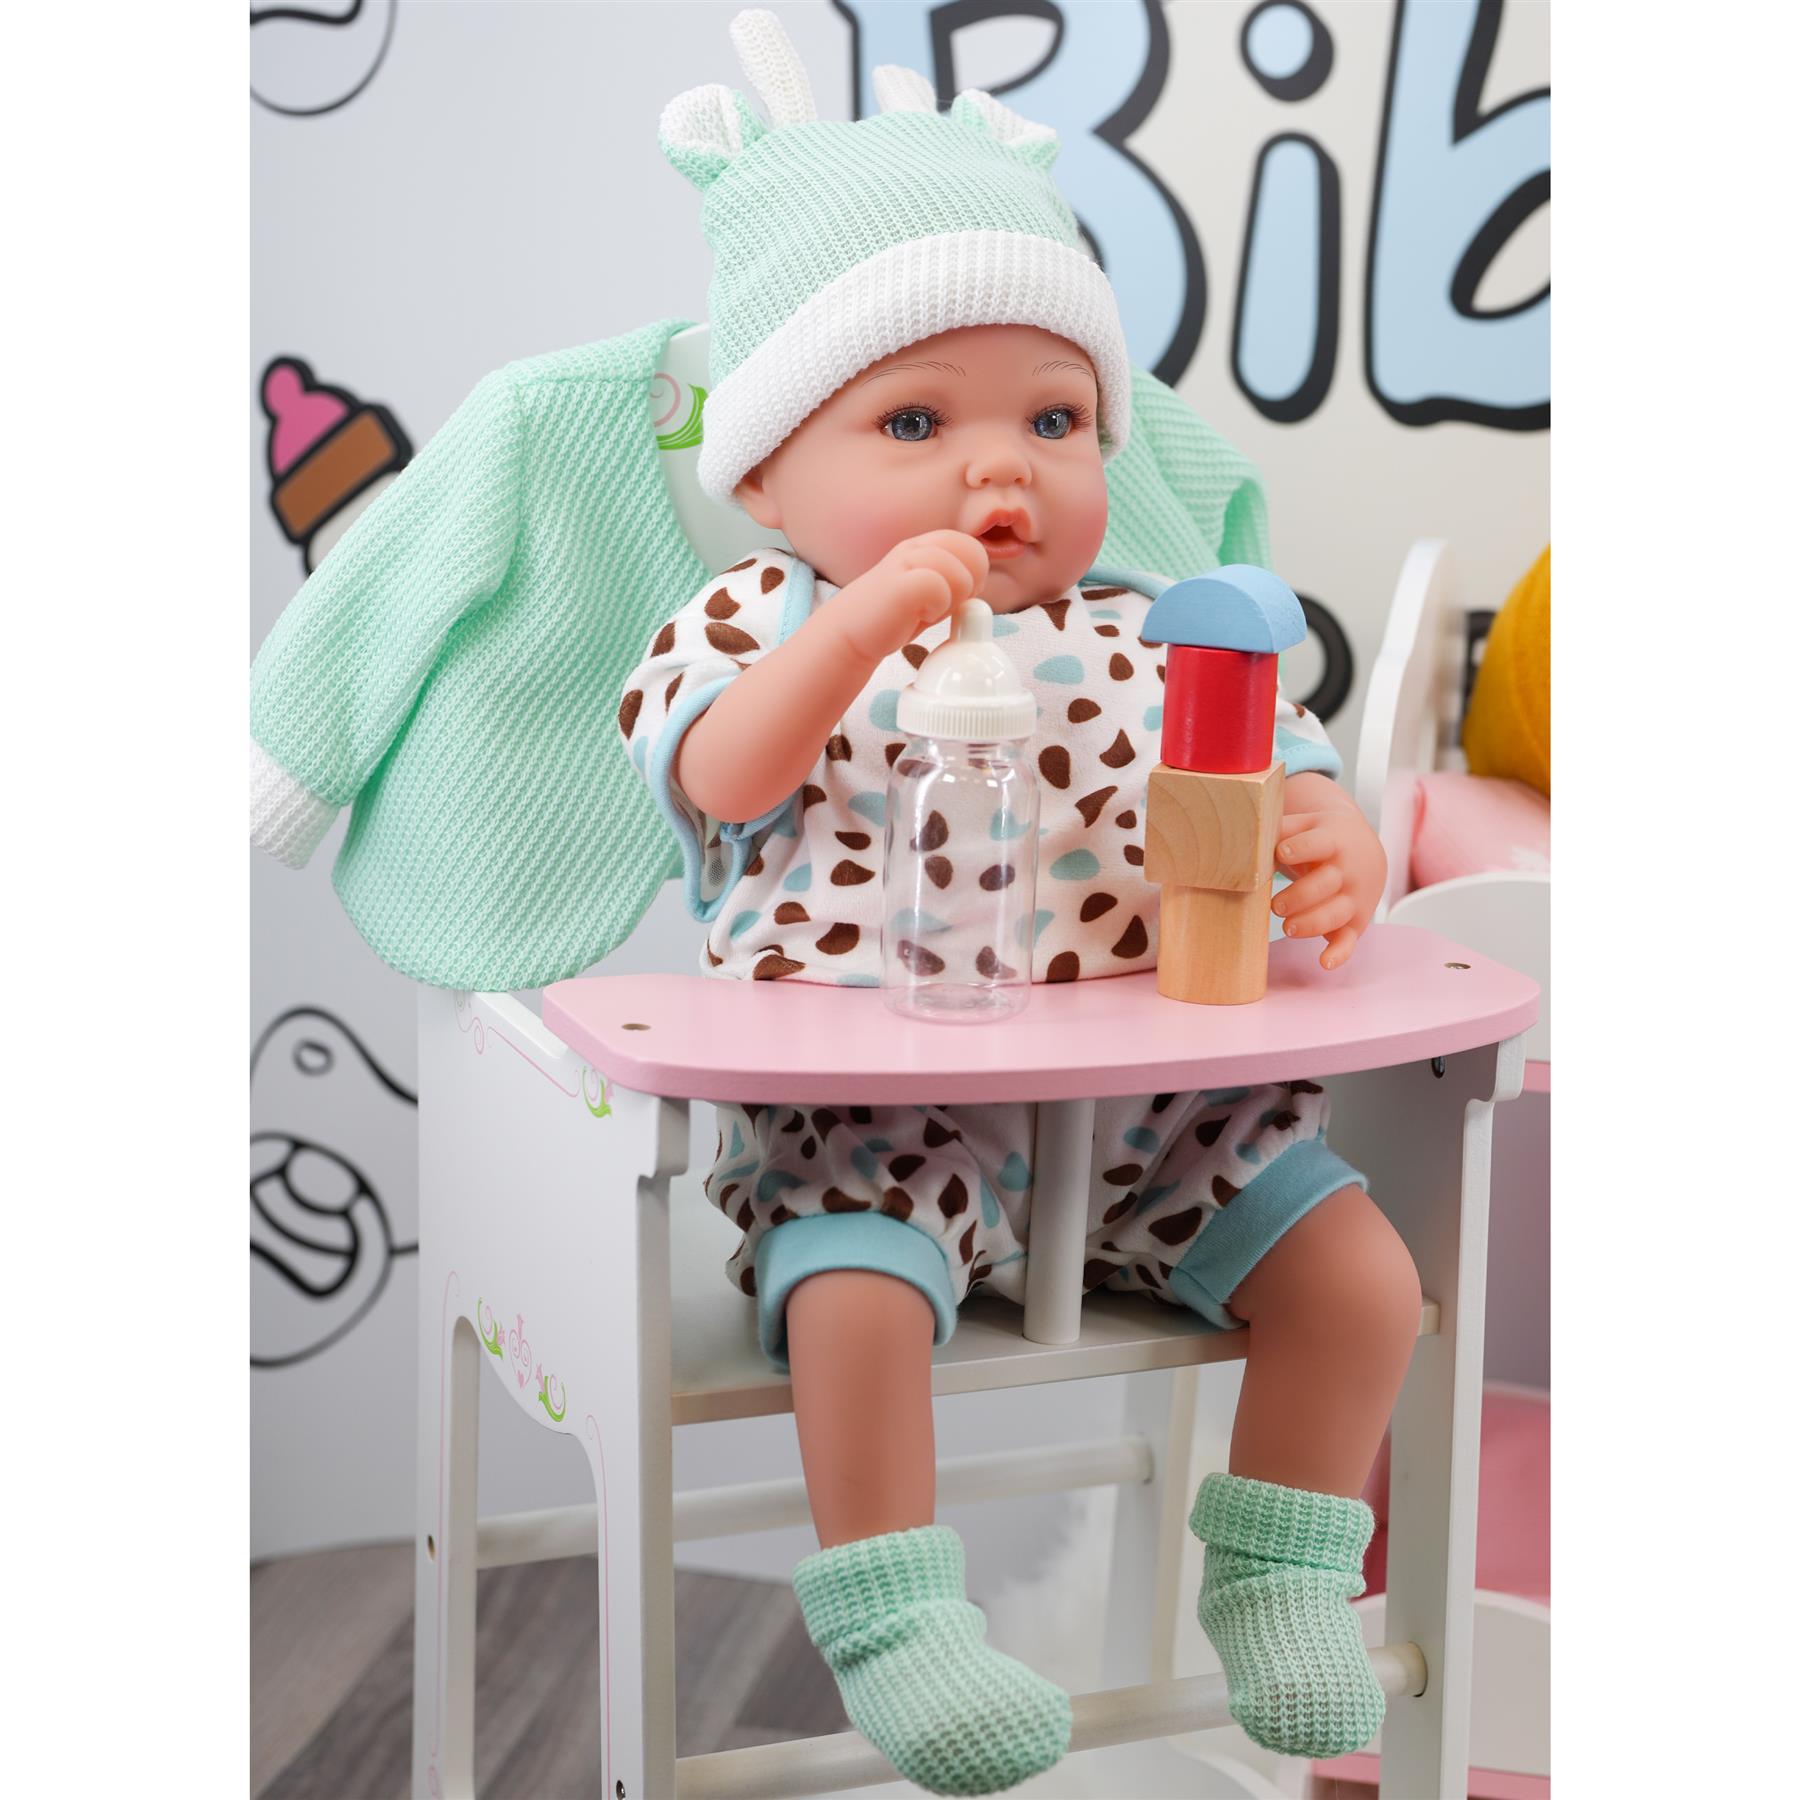 BiBi Doll Mint Giraffe Boy Outfit BiBi Outfits - Reborn Doll Clothes (Mint Jacket) (50 cm / 20")